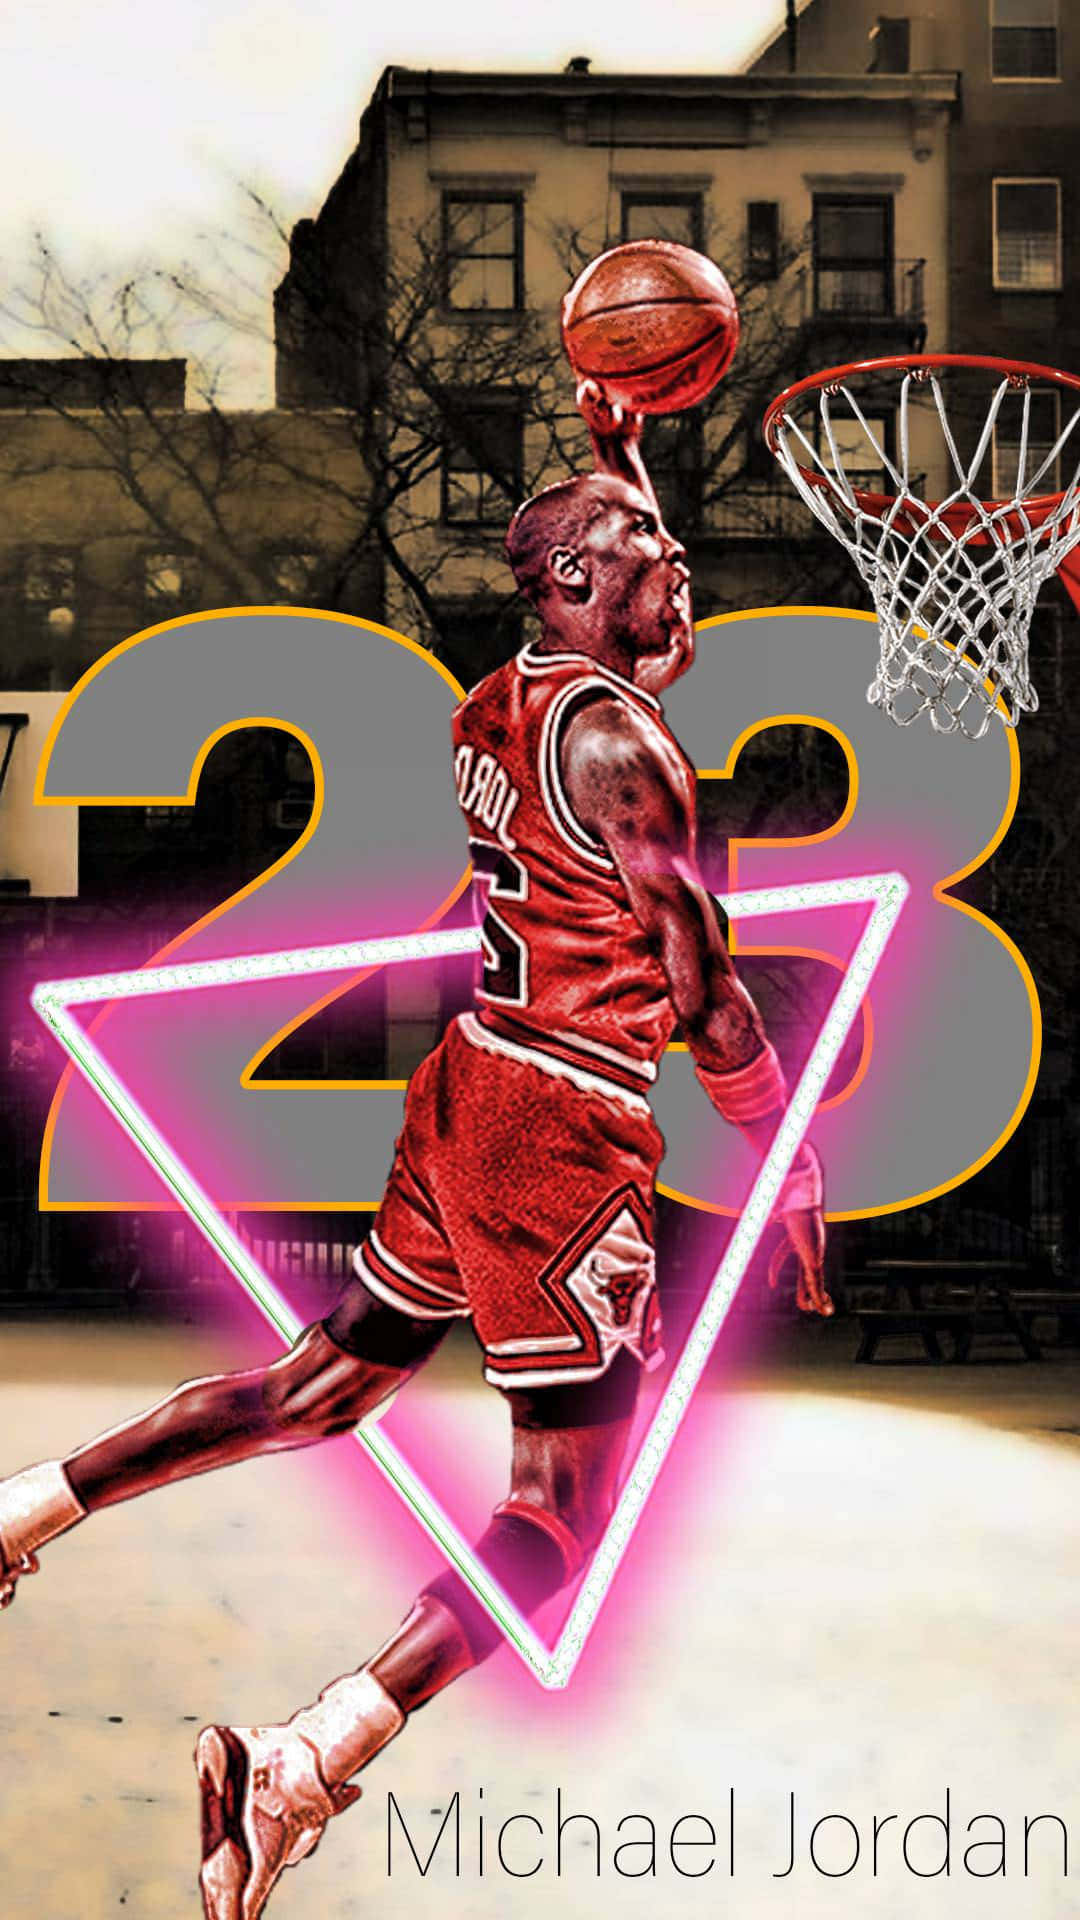 Michael Jordan 23 Chicago Bulls NBA  Basketball  Sports Background  Wallpapers on Desktop Nexus Image 1662746